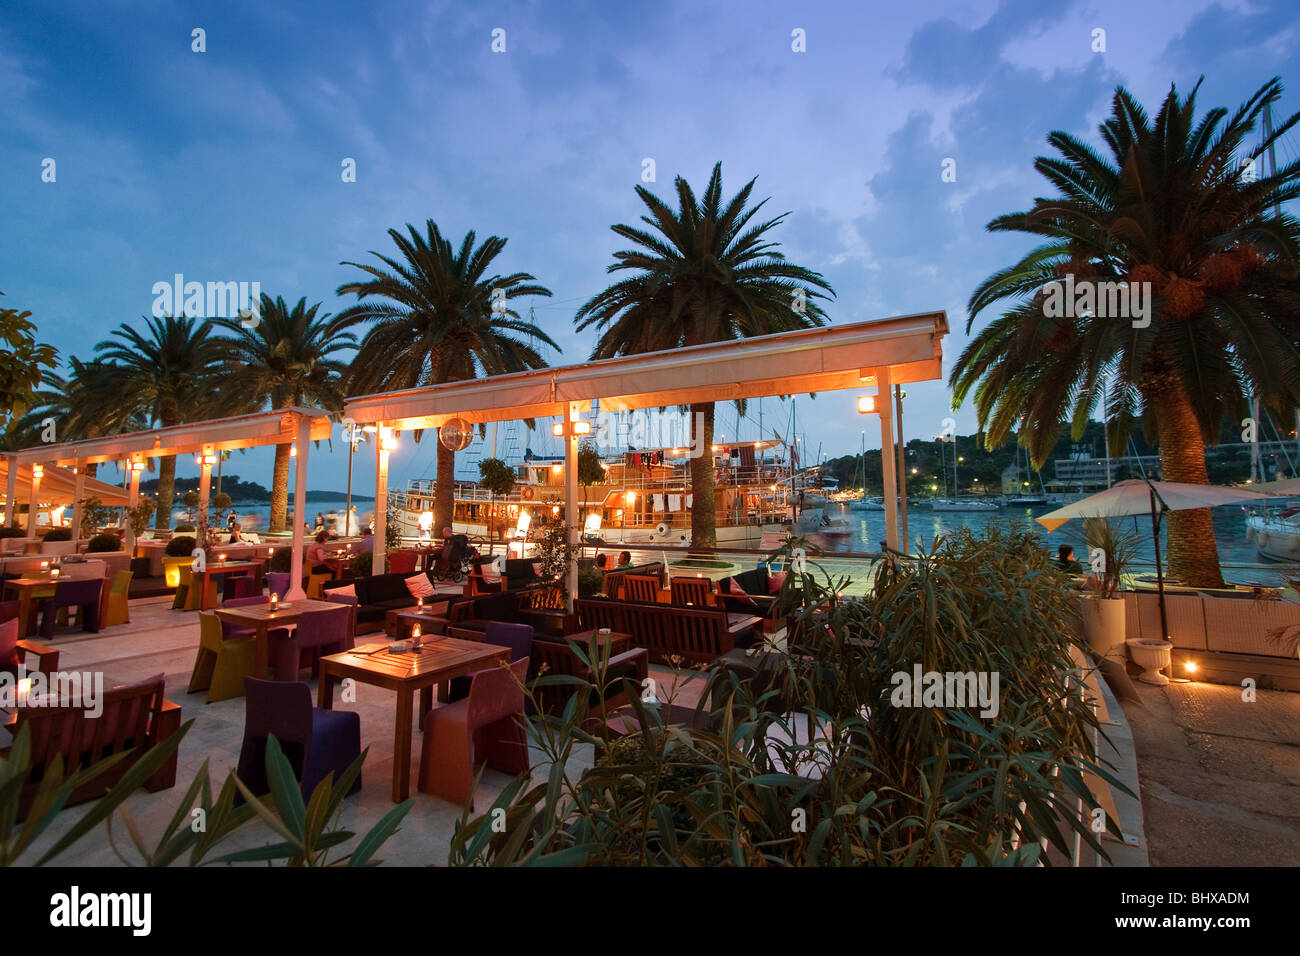 Restaurant and Bar at the Promenade of Hvar at dusk, Croatia Stock Photo